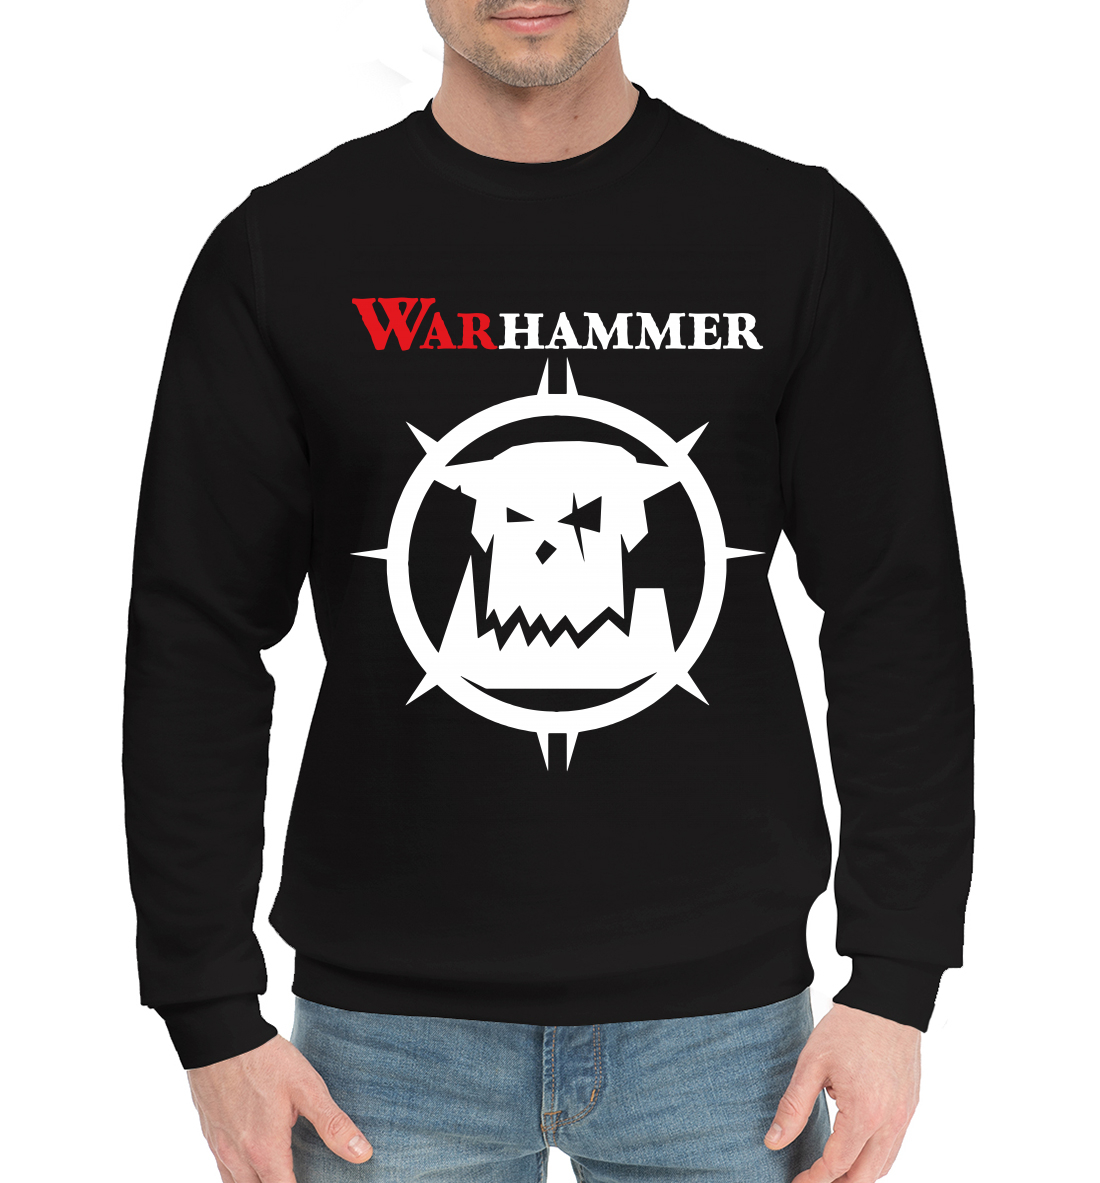 Мужской Хлопковый свитшот с принтом Warhammer, артикул WHR-439141-hsw-2mp